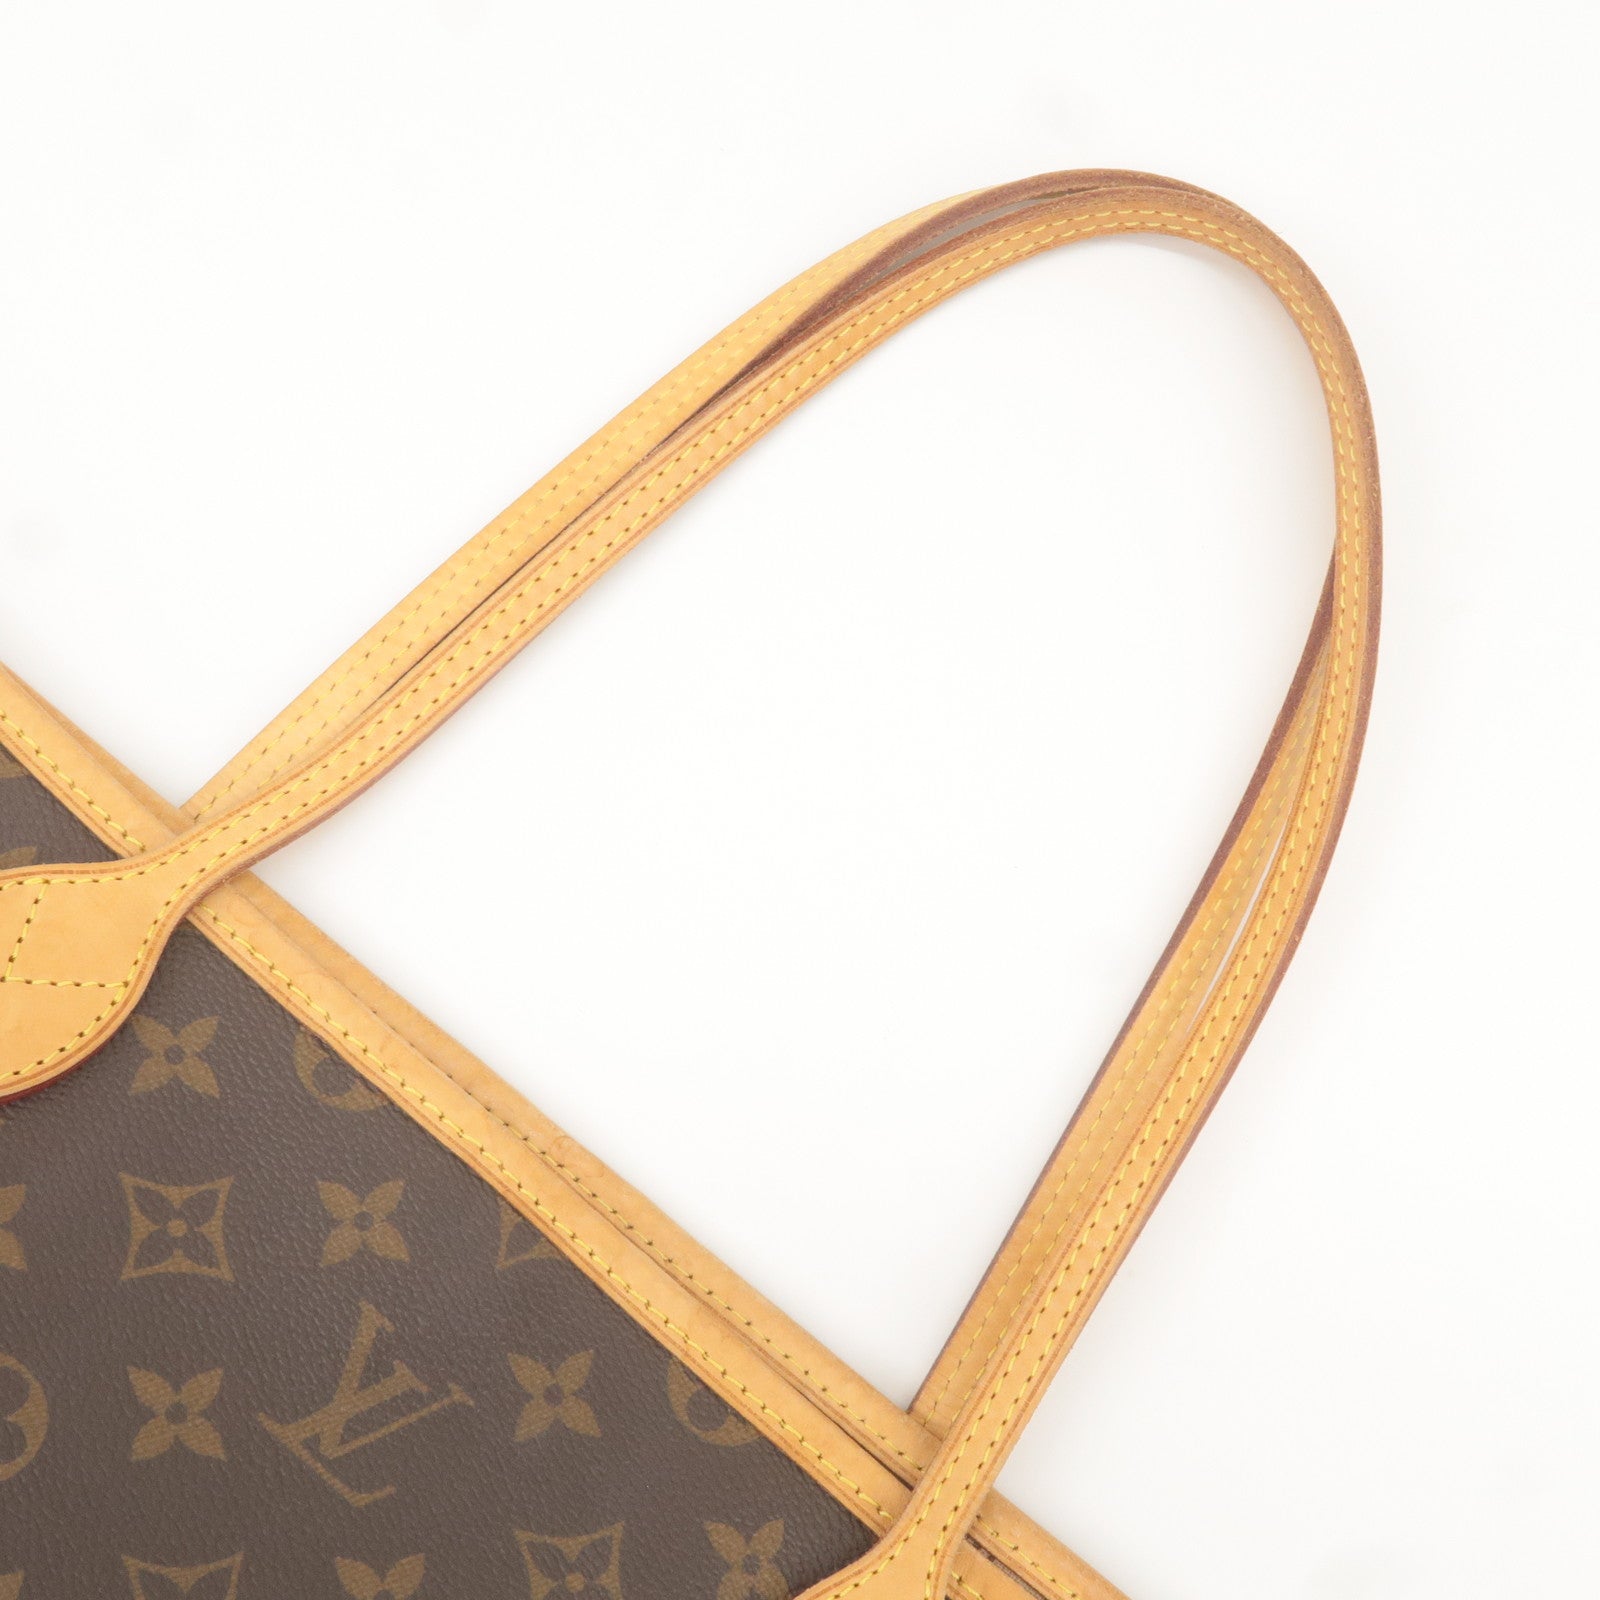 Tote - Bag - Vuitton - M40157 – dct - Louis - Monogram - Sac